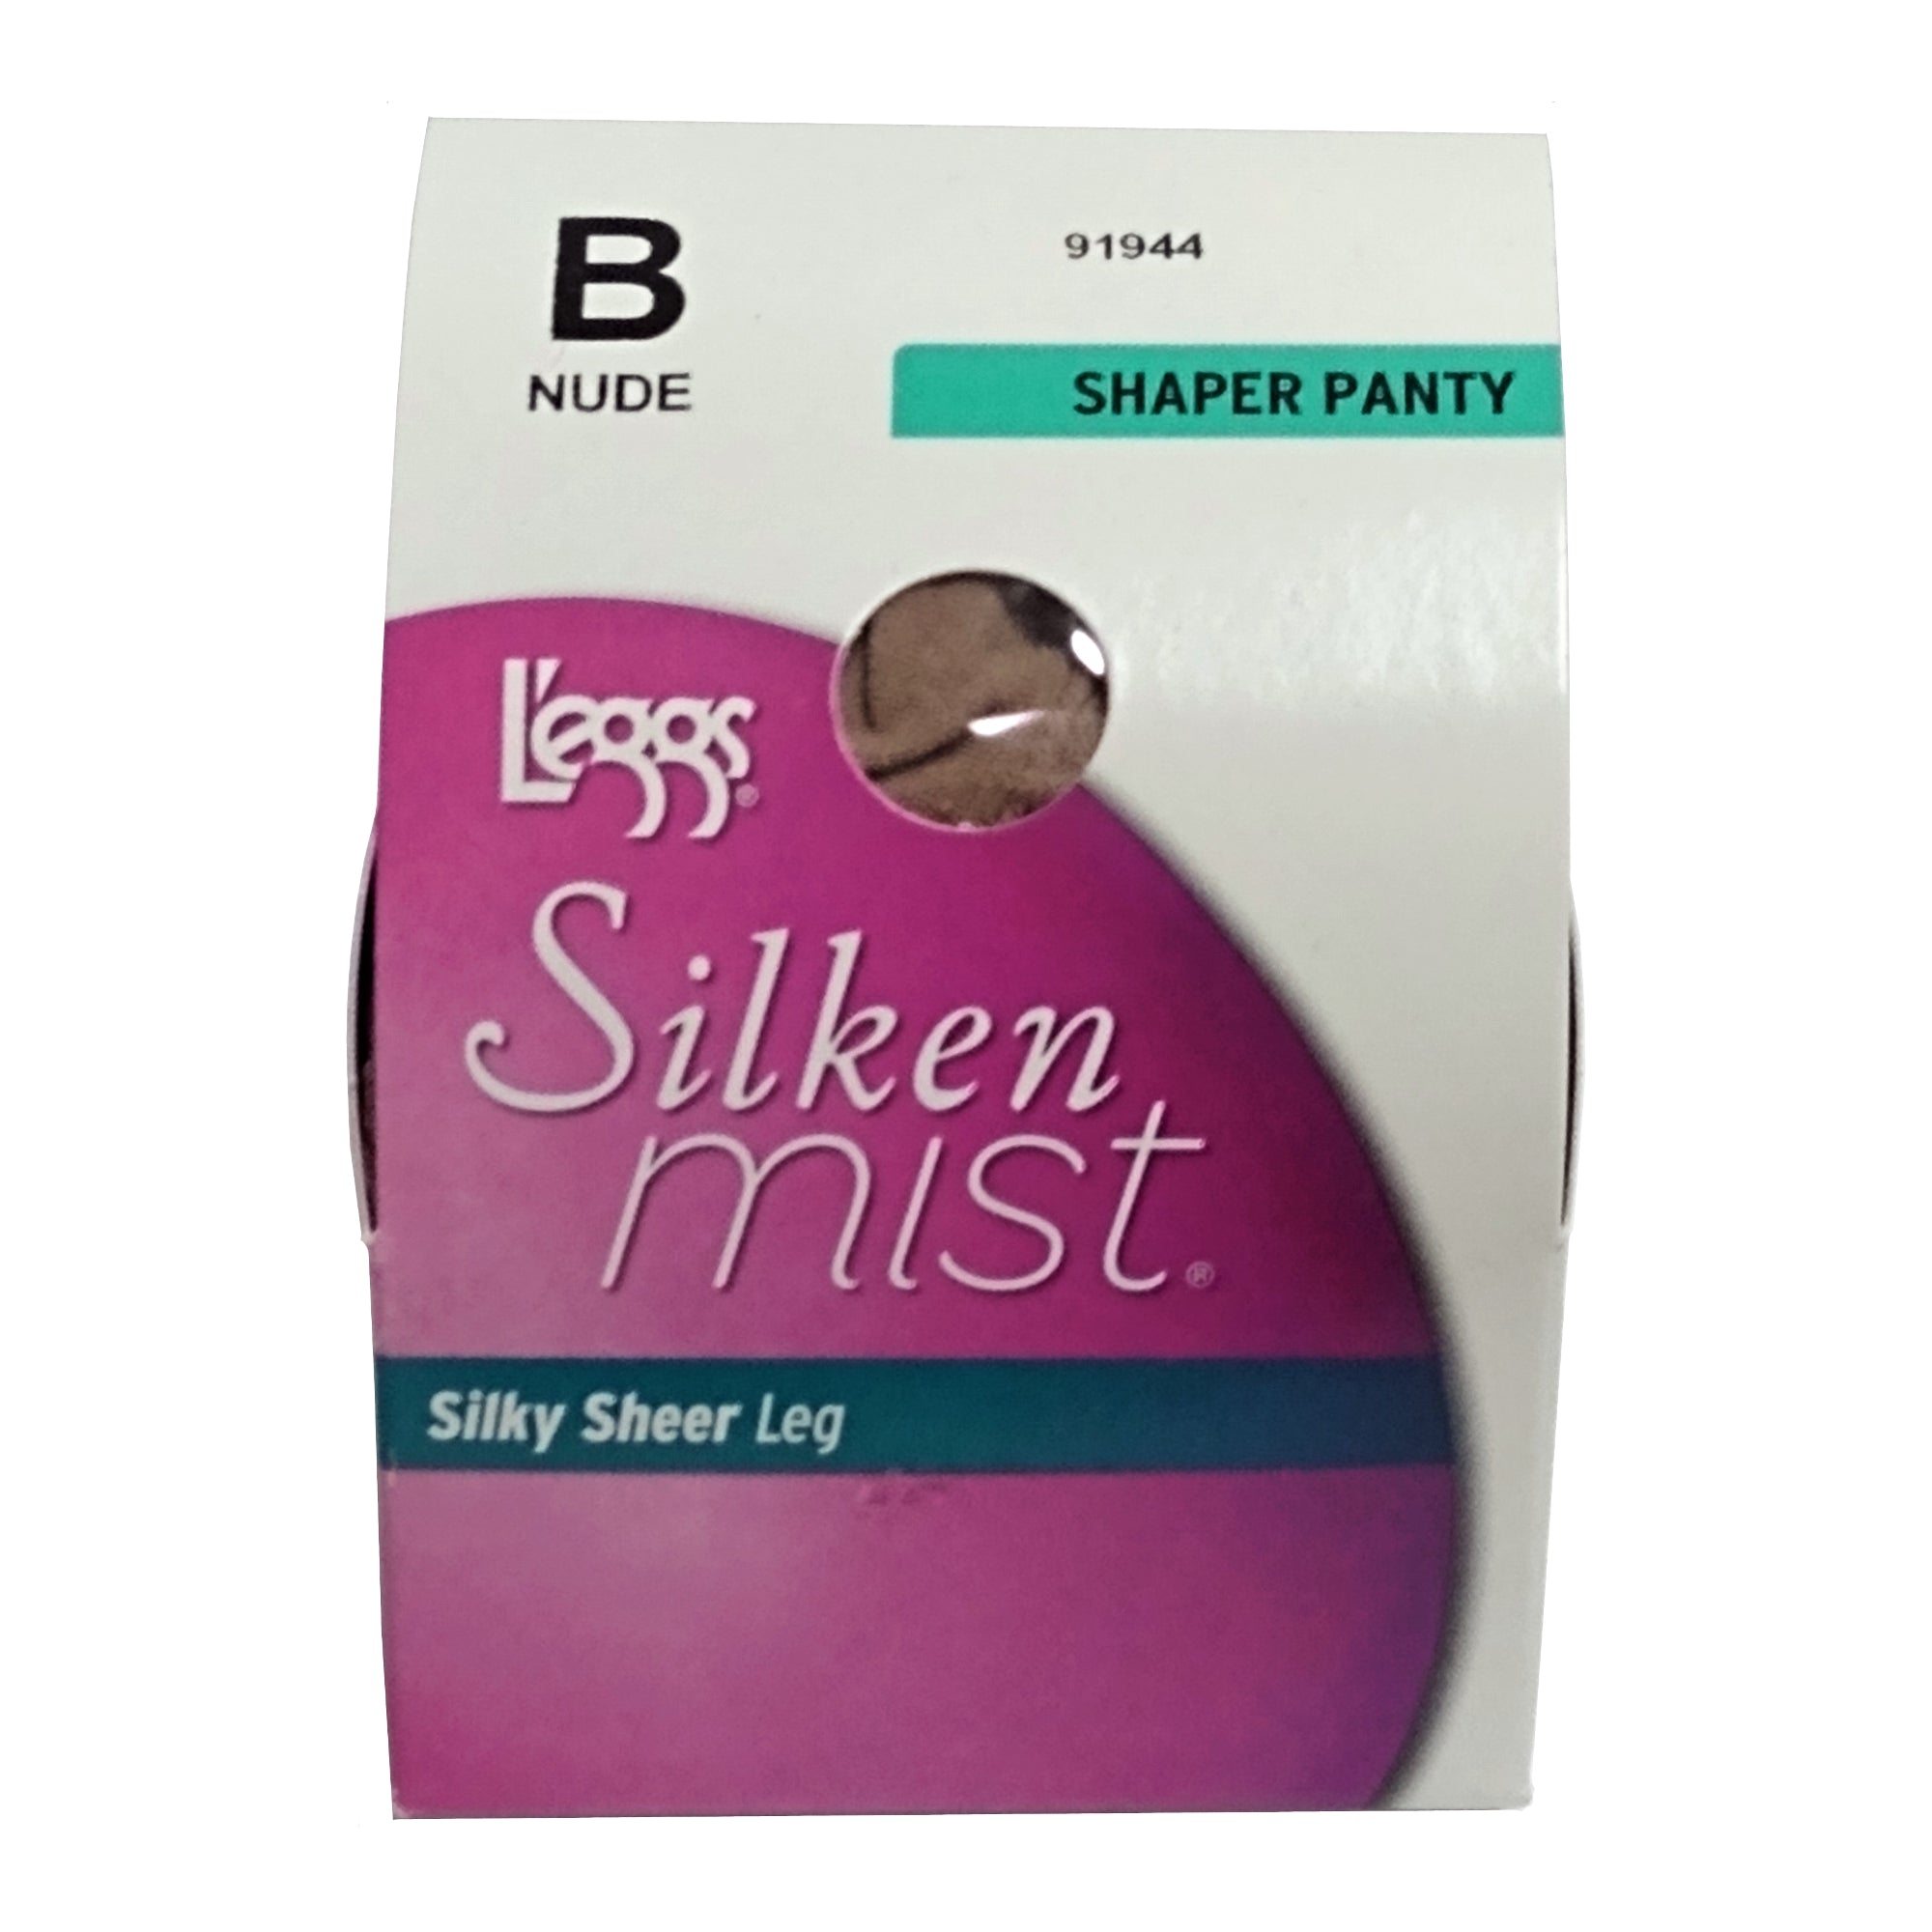 Leggs Silken Mist Shaper Panty B, 1 Pack, 1 Pair, By Hanesbrands Inc.